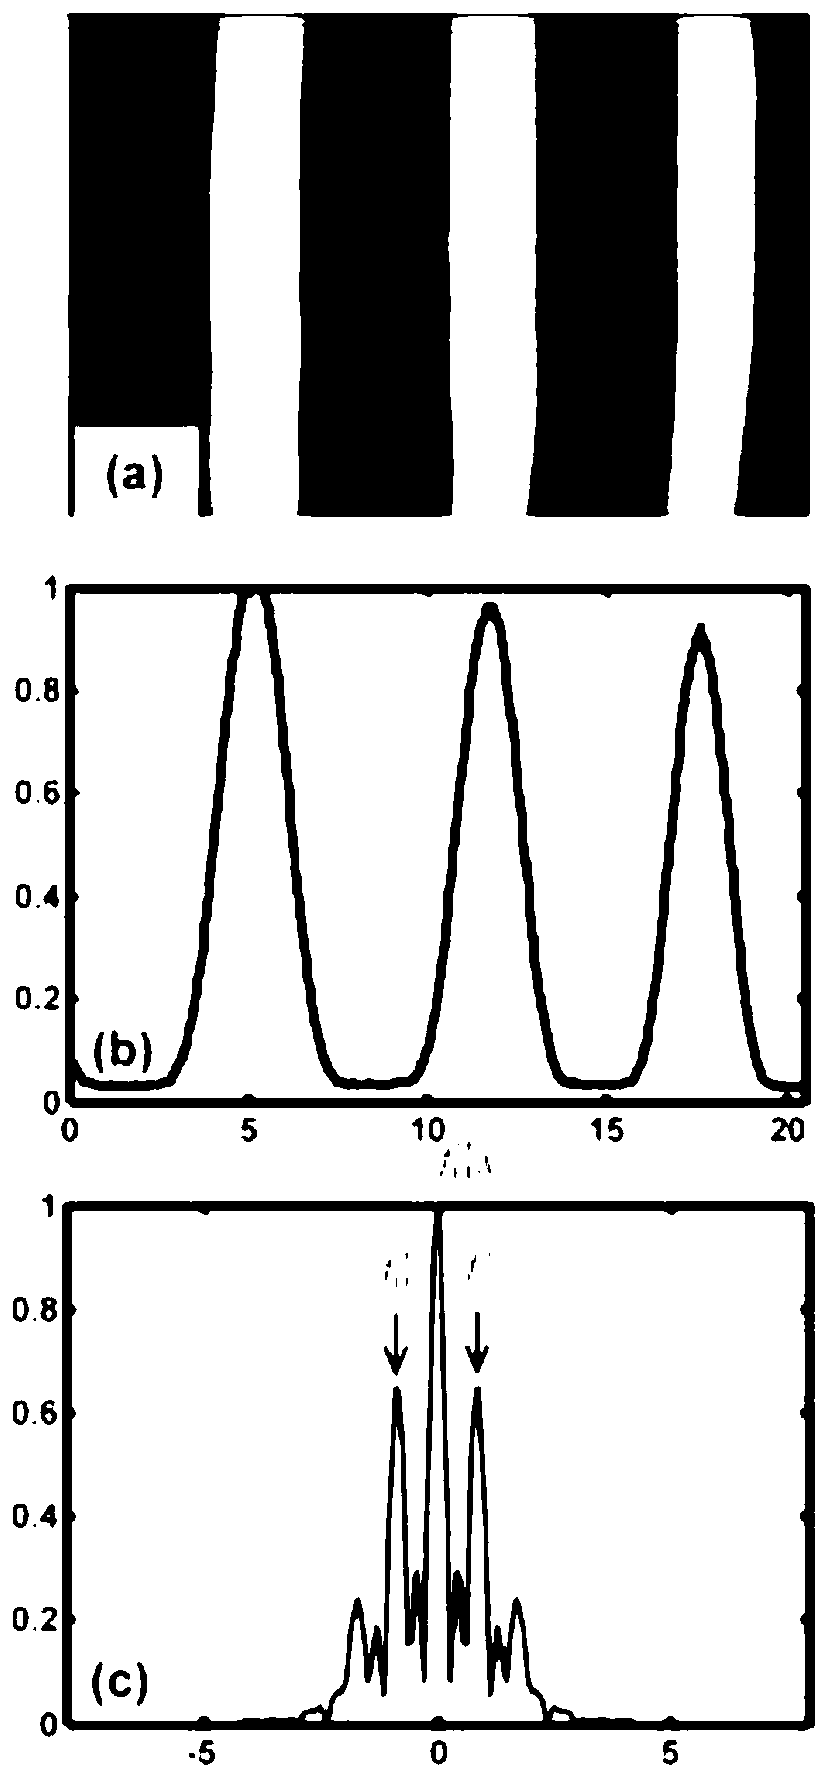 Binary stripe stack based sinusoidal grating generation method